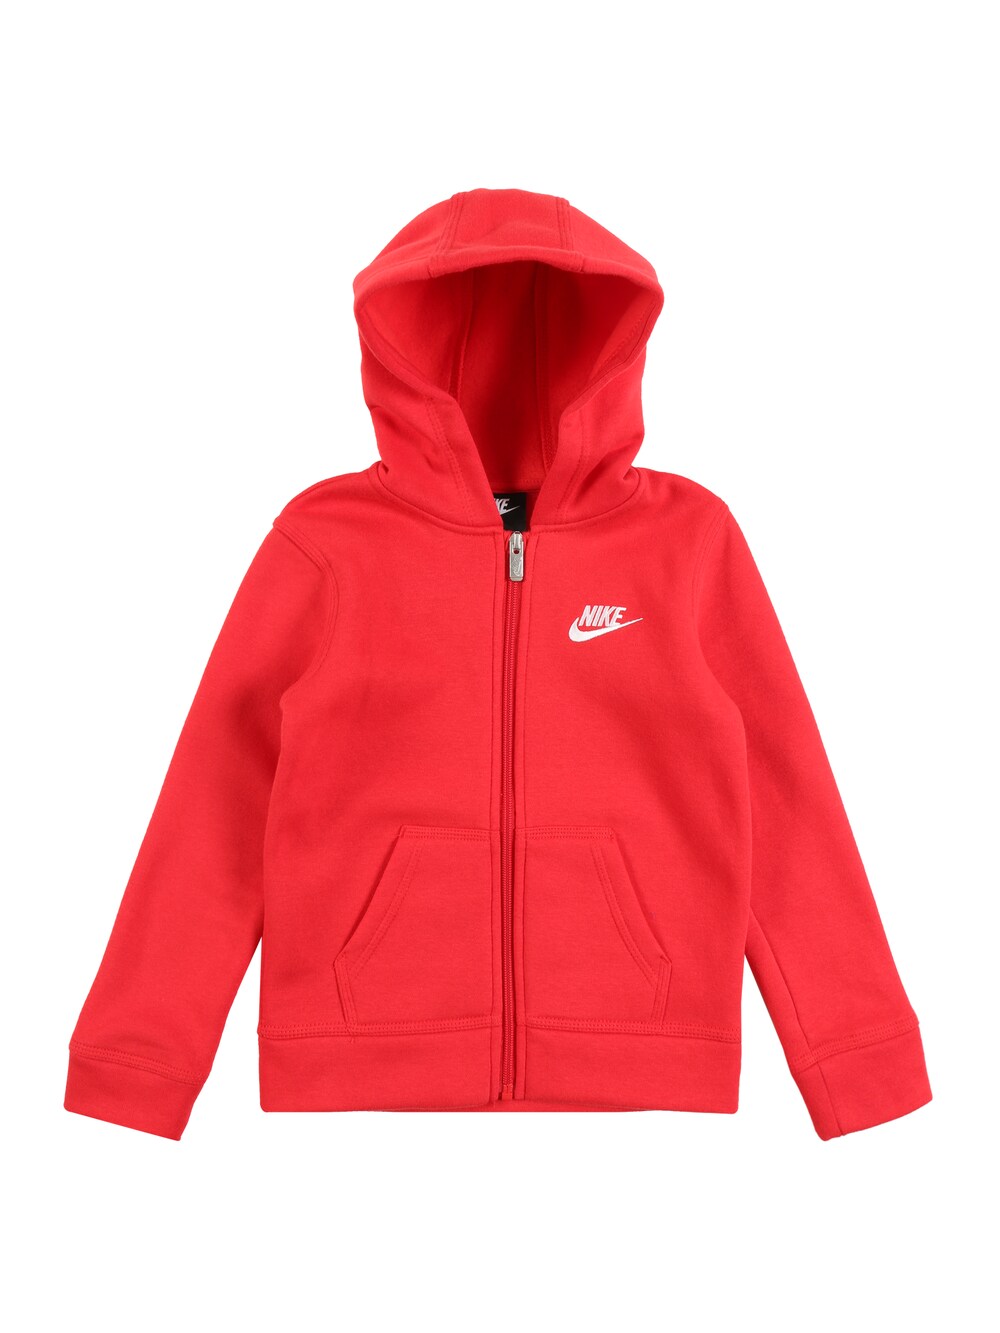 Толстовка на молнии Nike Sportswear Club, красный толстовка на молнии nike sportswear бежевый